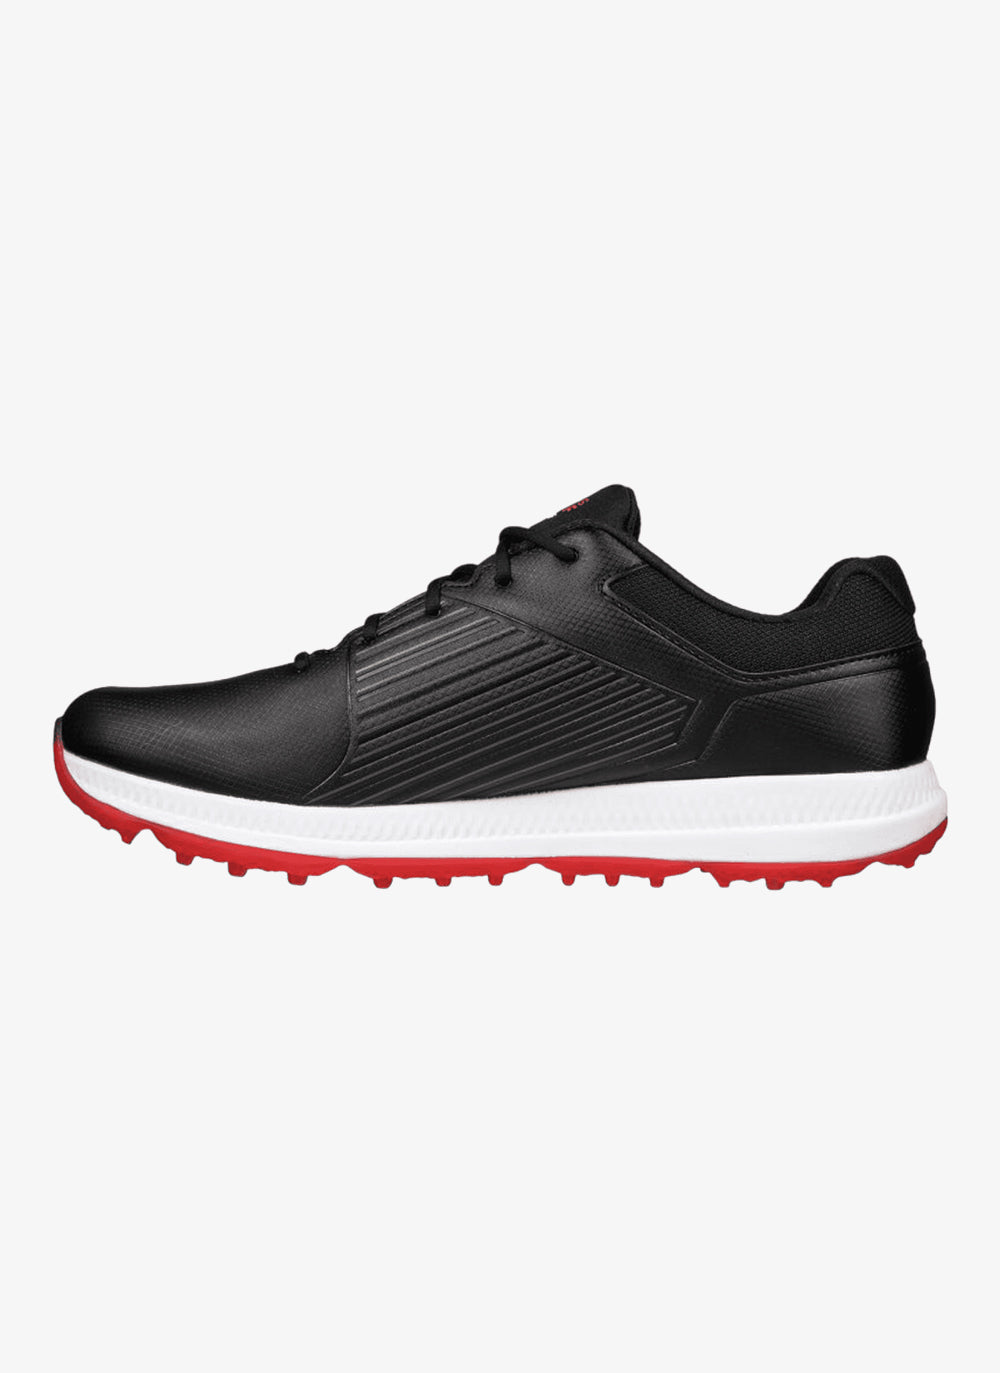 Skechers Go Golf Elite 5 Golf Shoes 214065